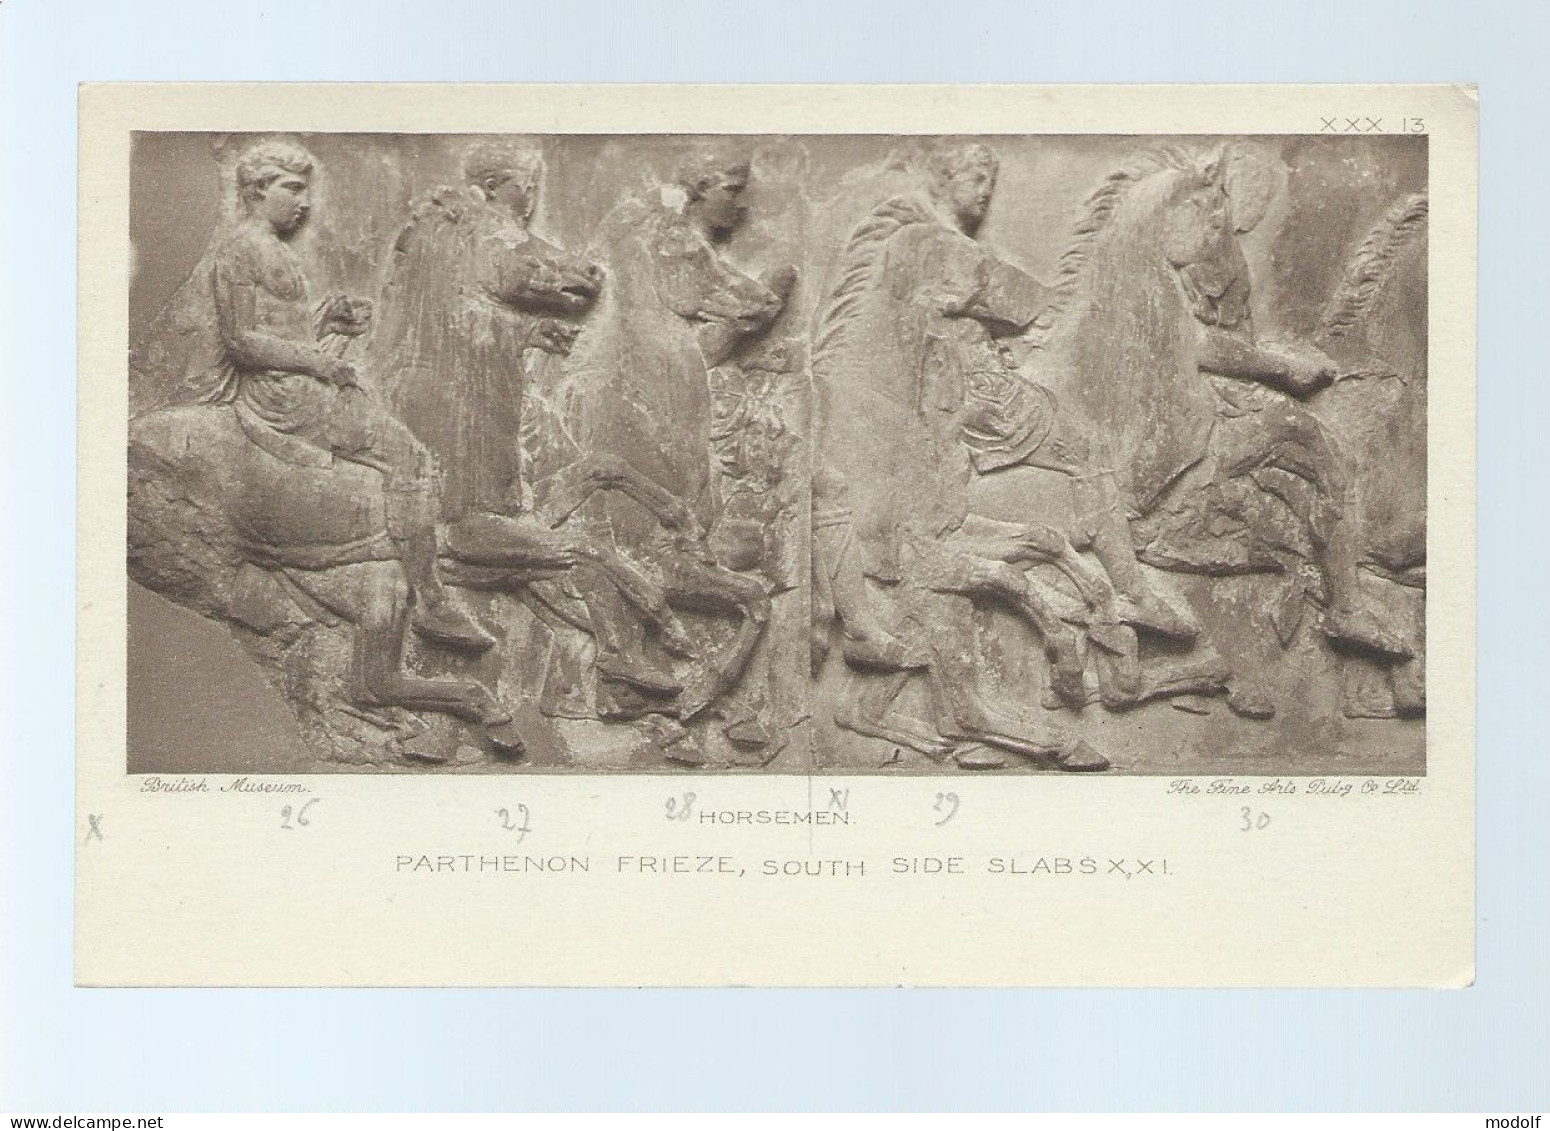 CPA - Arts - Sculptures - British Museum - Parthenon Frieze, South Side Slabs X,XI - Non Circulée - Skulpturen